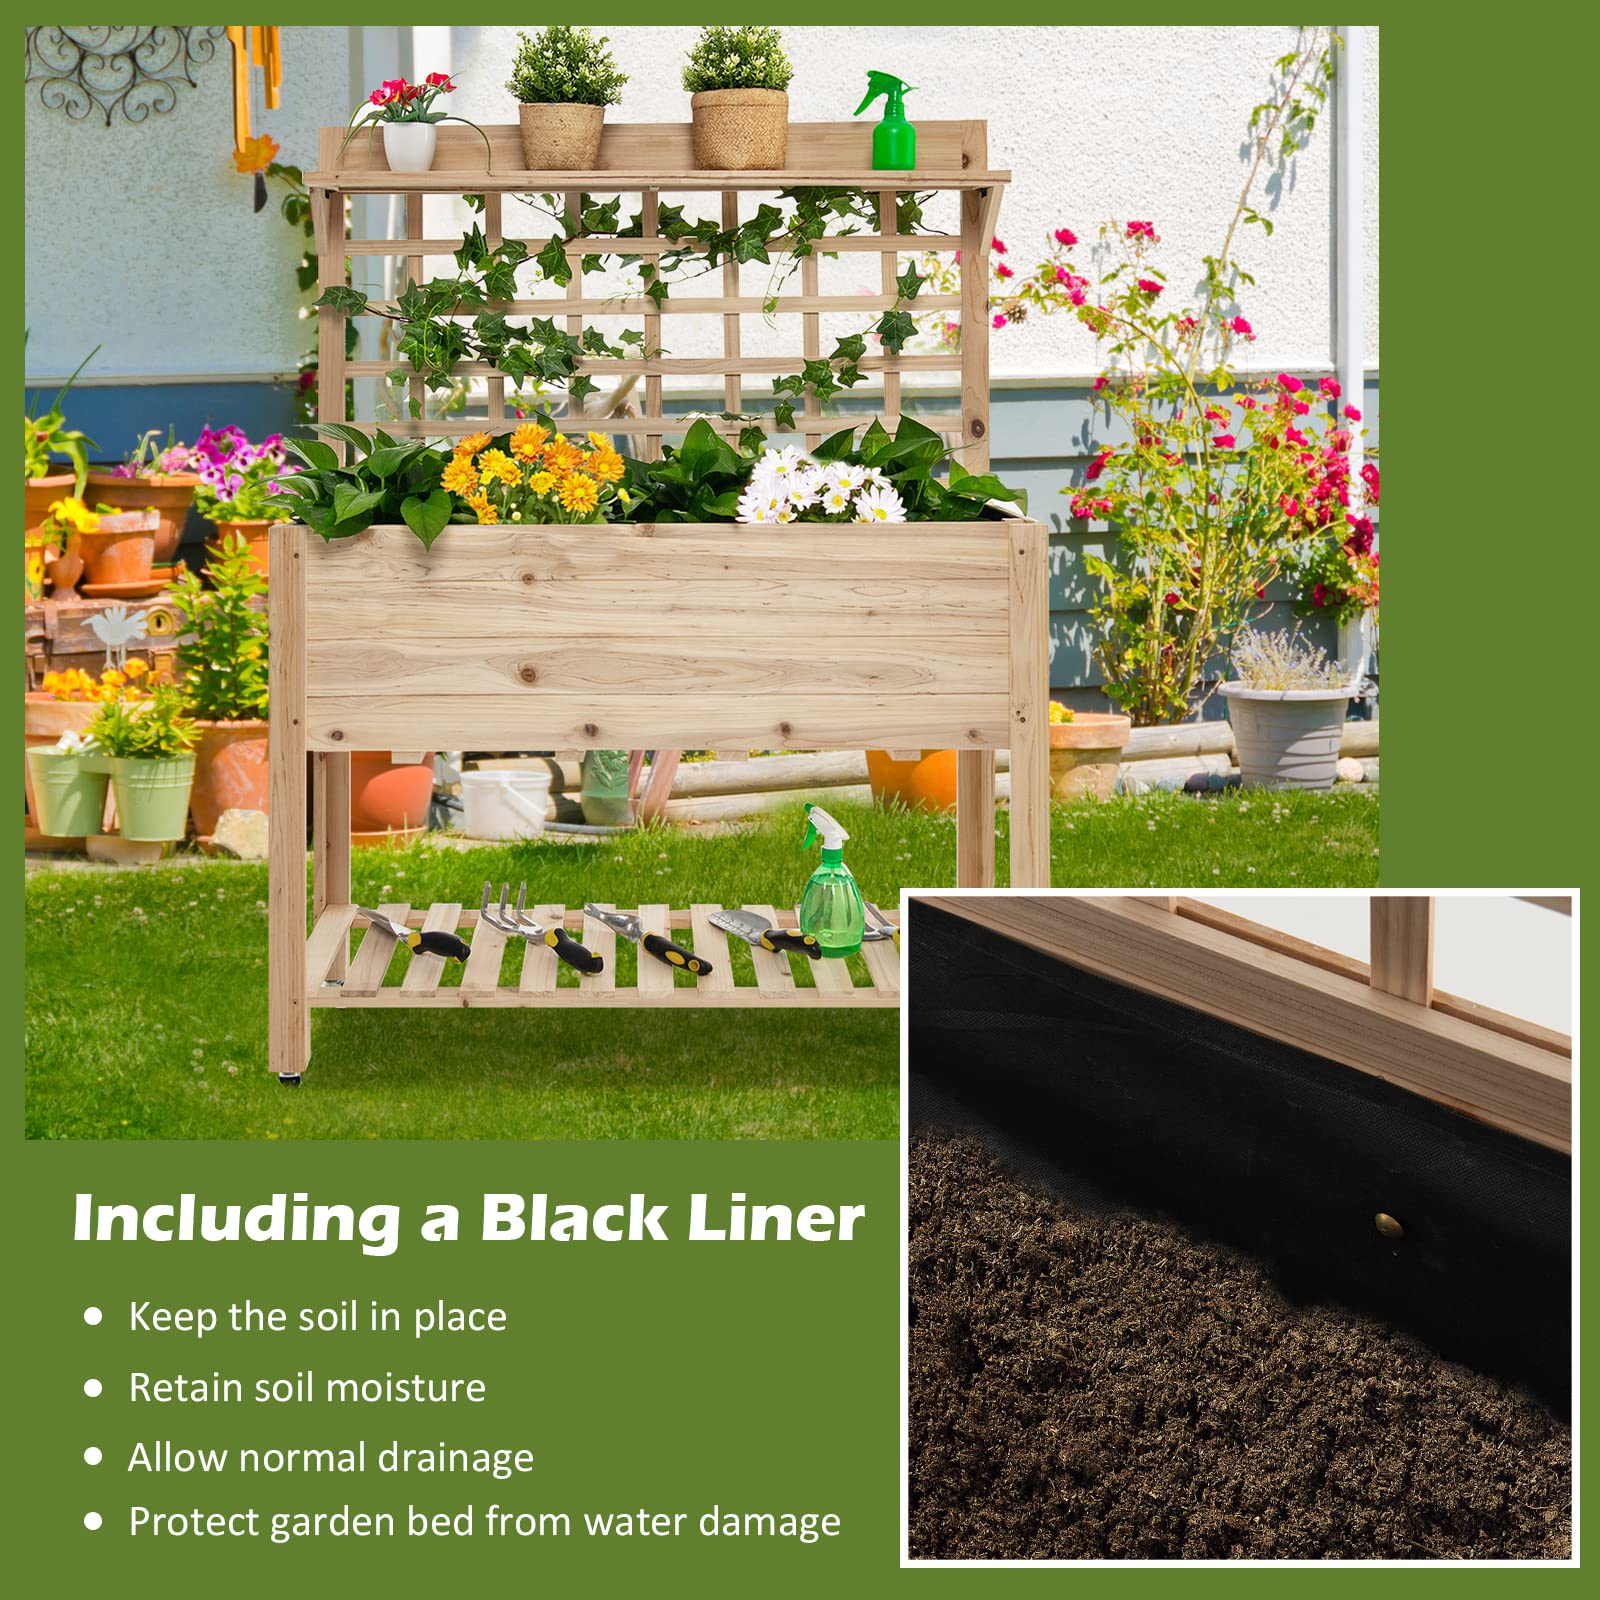 Giantex Raised Garden Bed on Wheels, Wood Planter with Trellis, Black Liner Storage Shelf